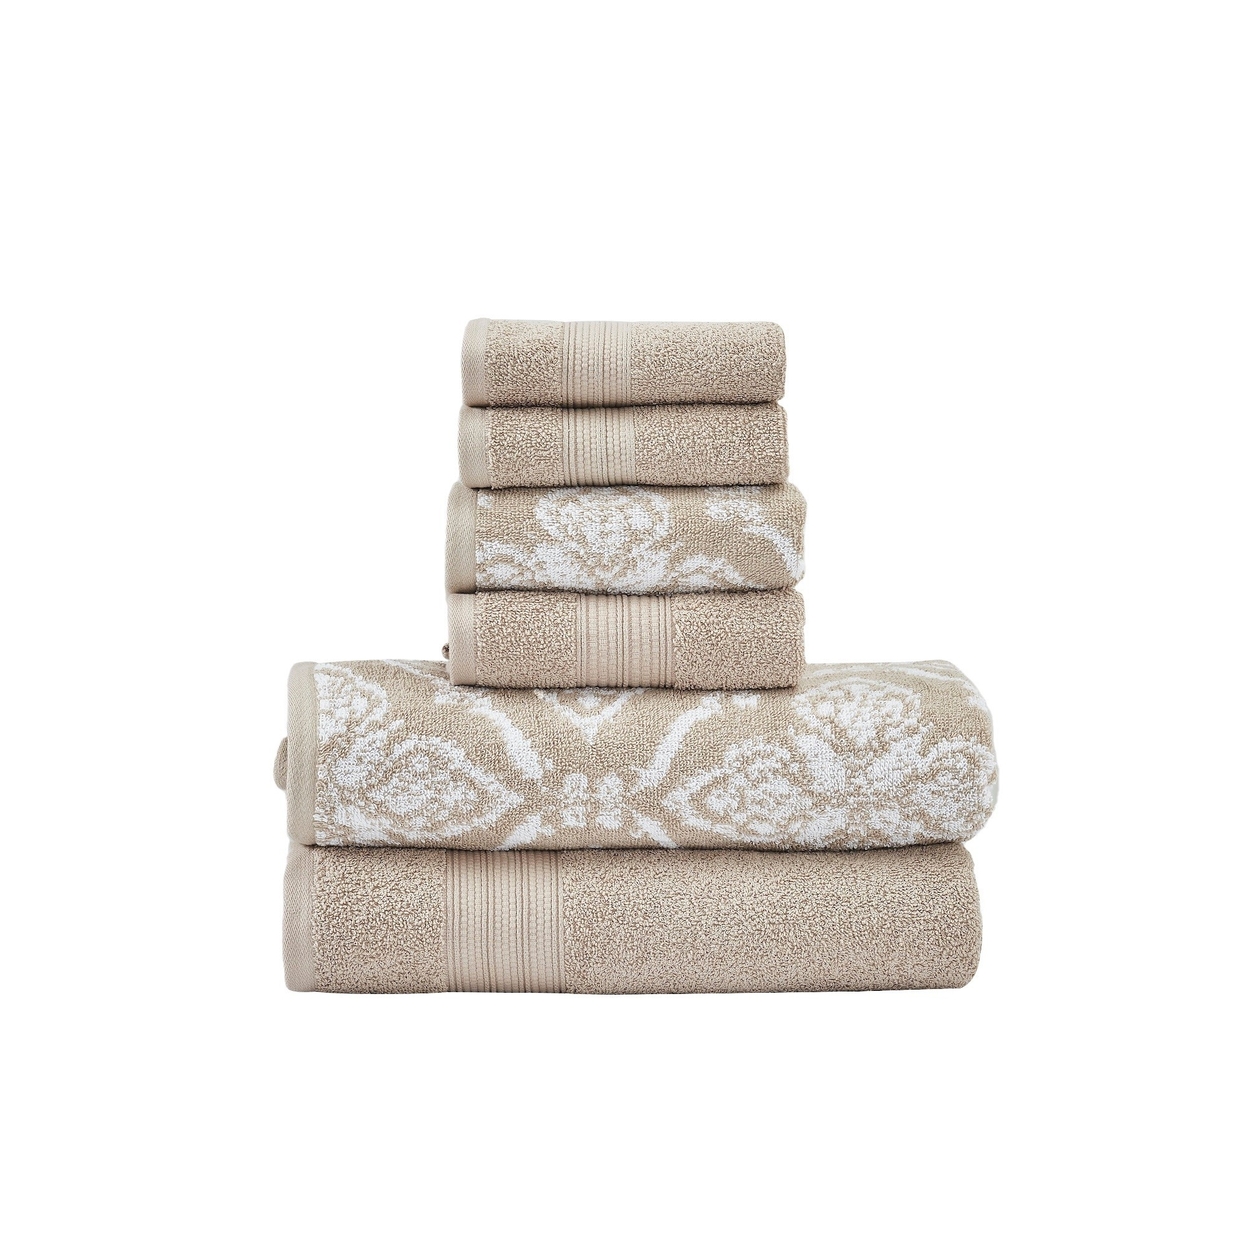 Naja 6pc Cotton Towel Set, Jacquard Pattern, White, Beige By The Urban Port- Saltoro Sherpi